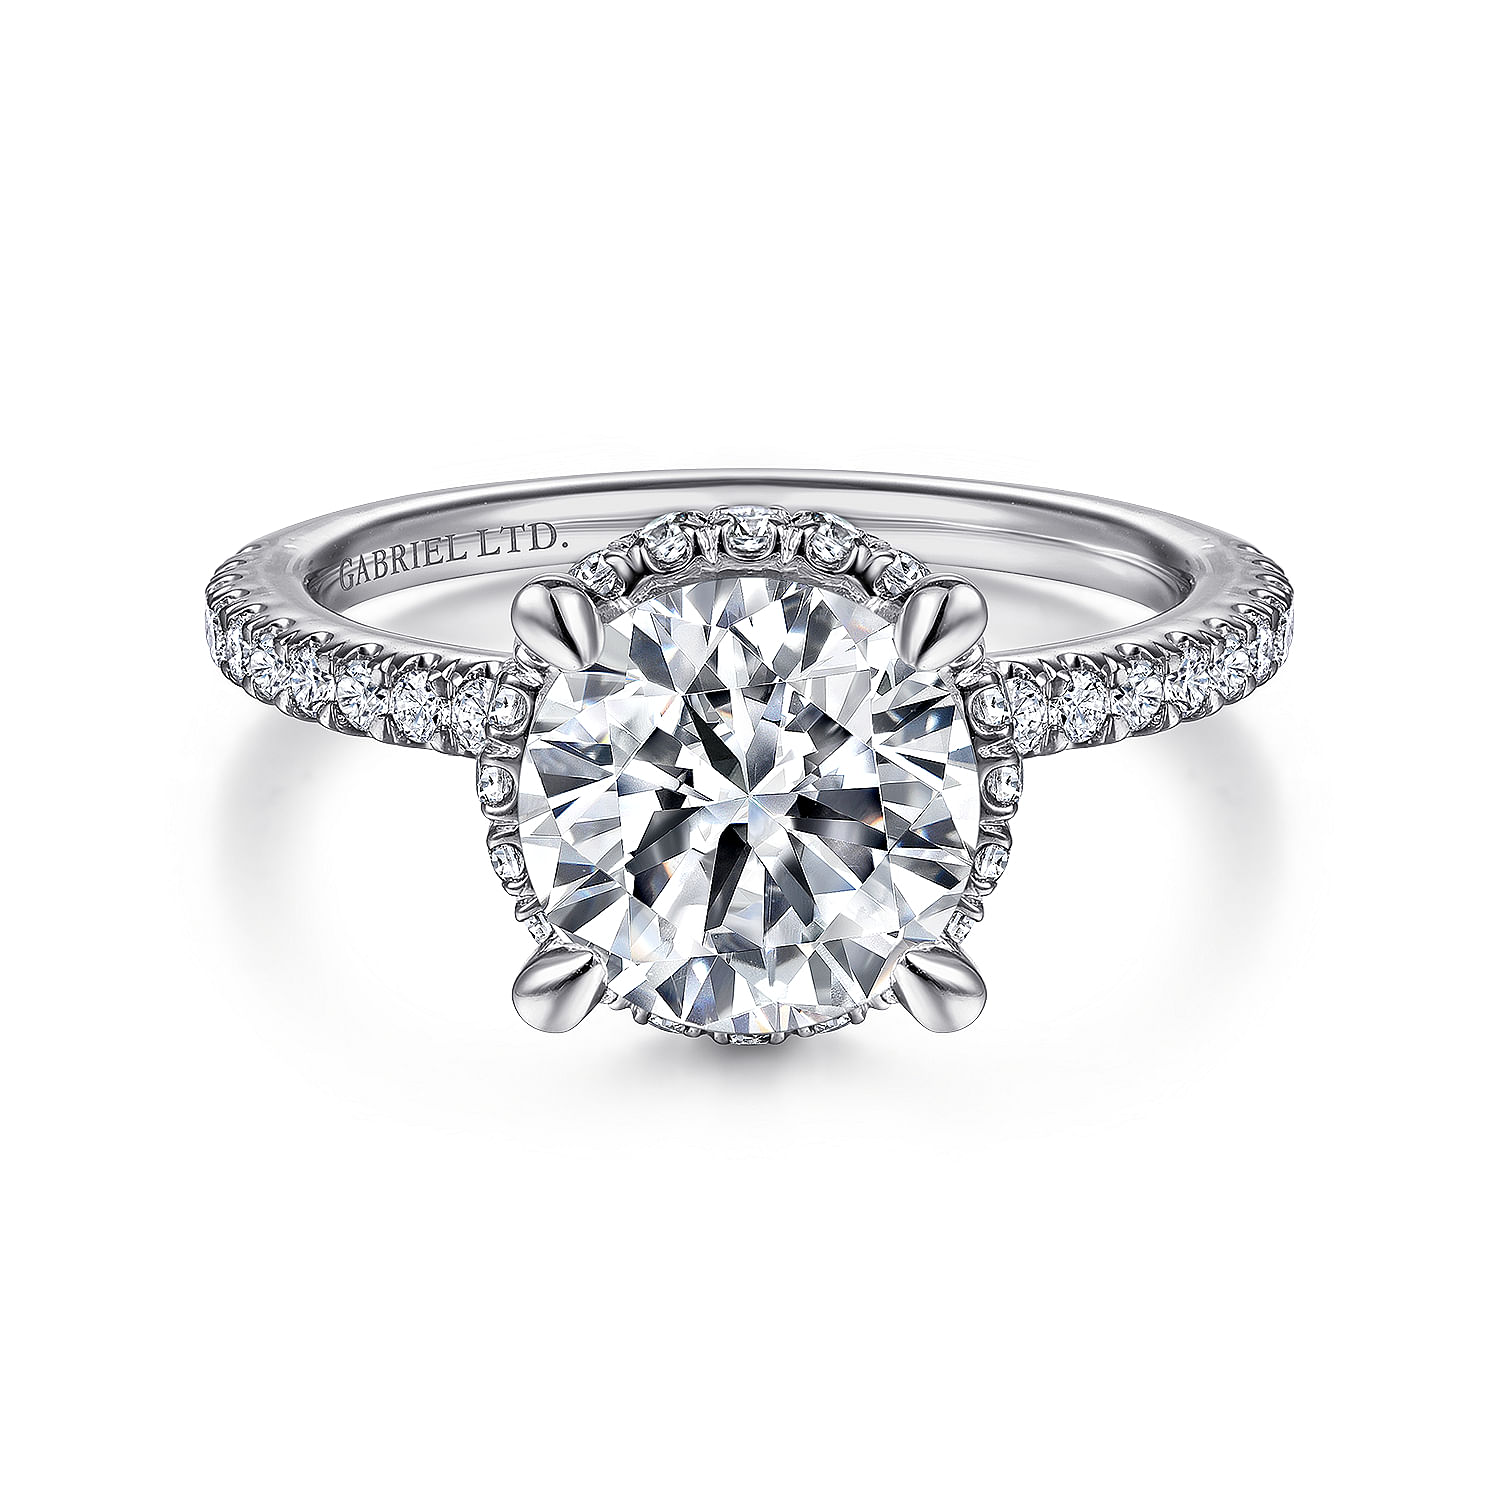 Gabriel - Vintage Inspired 18K White Gold Round Diamond Engagement Ring